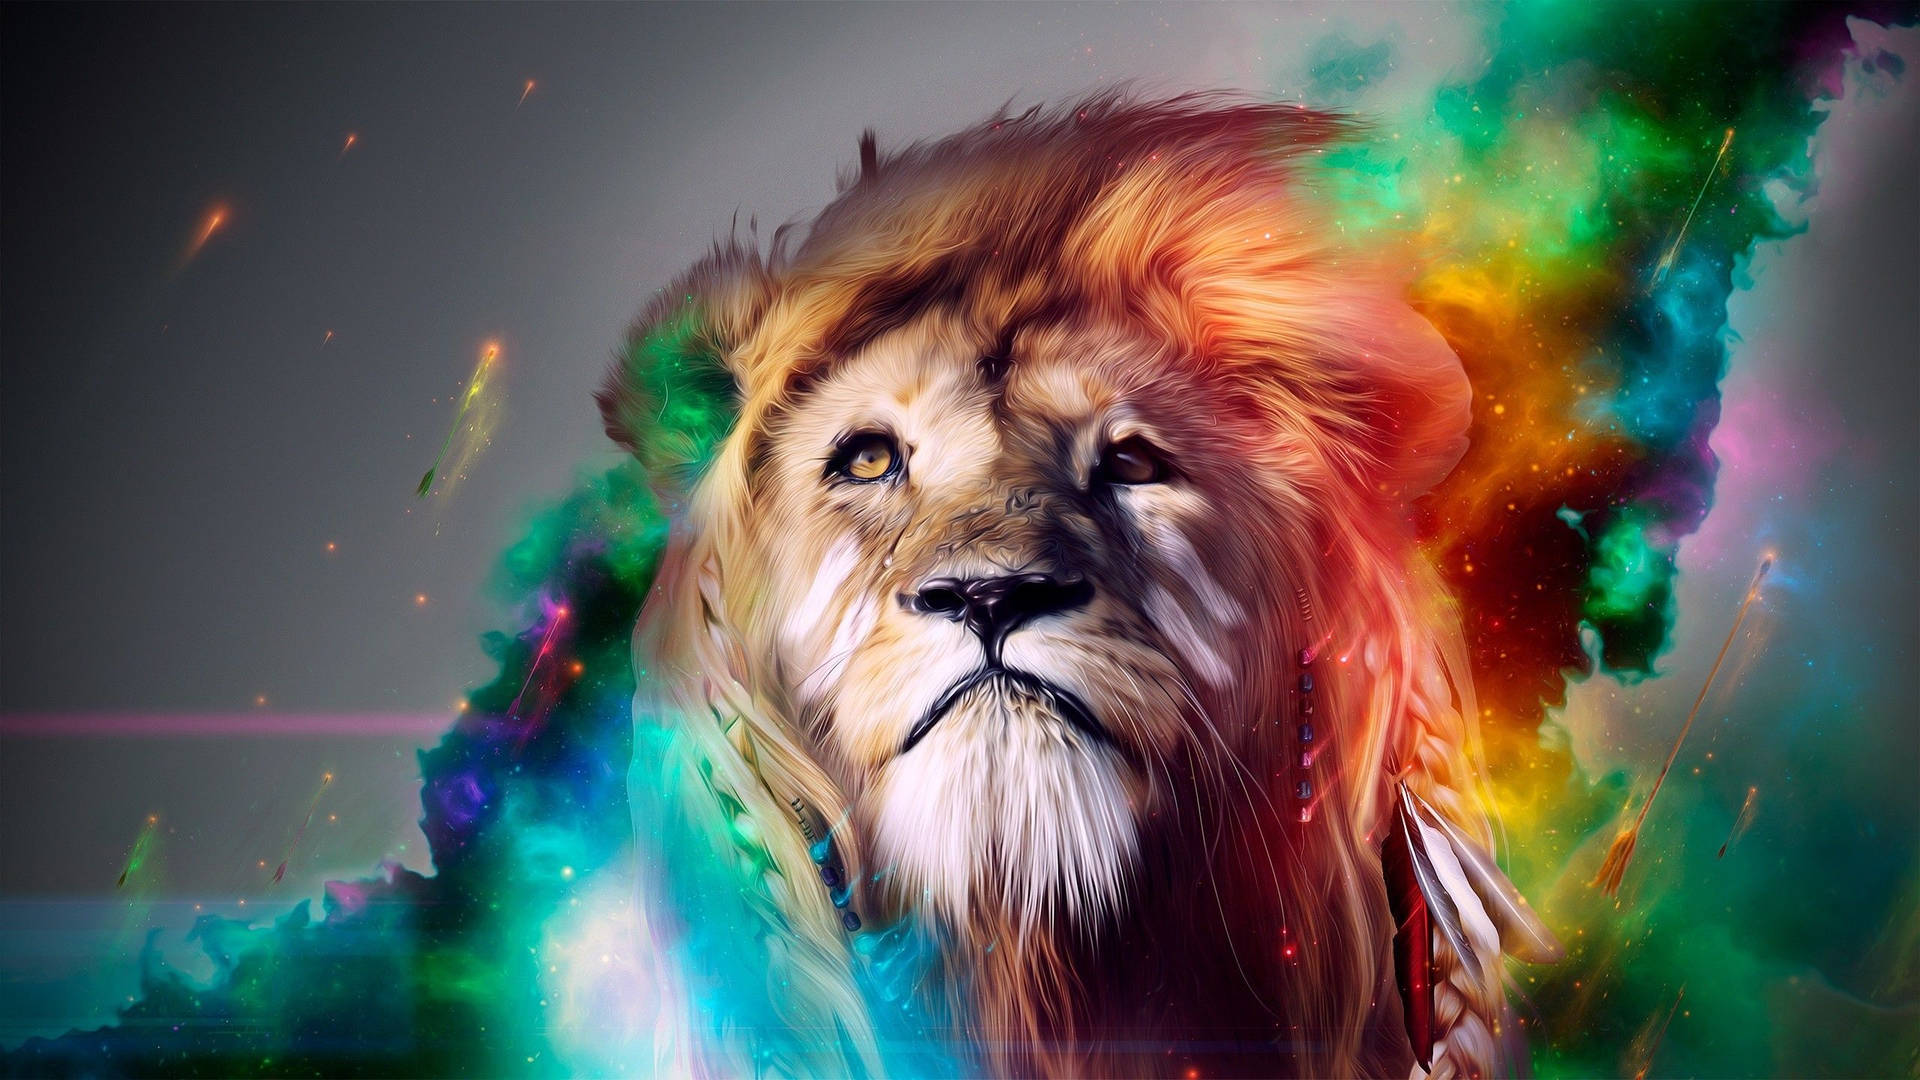 Cool Lion Many Colors Mane